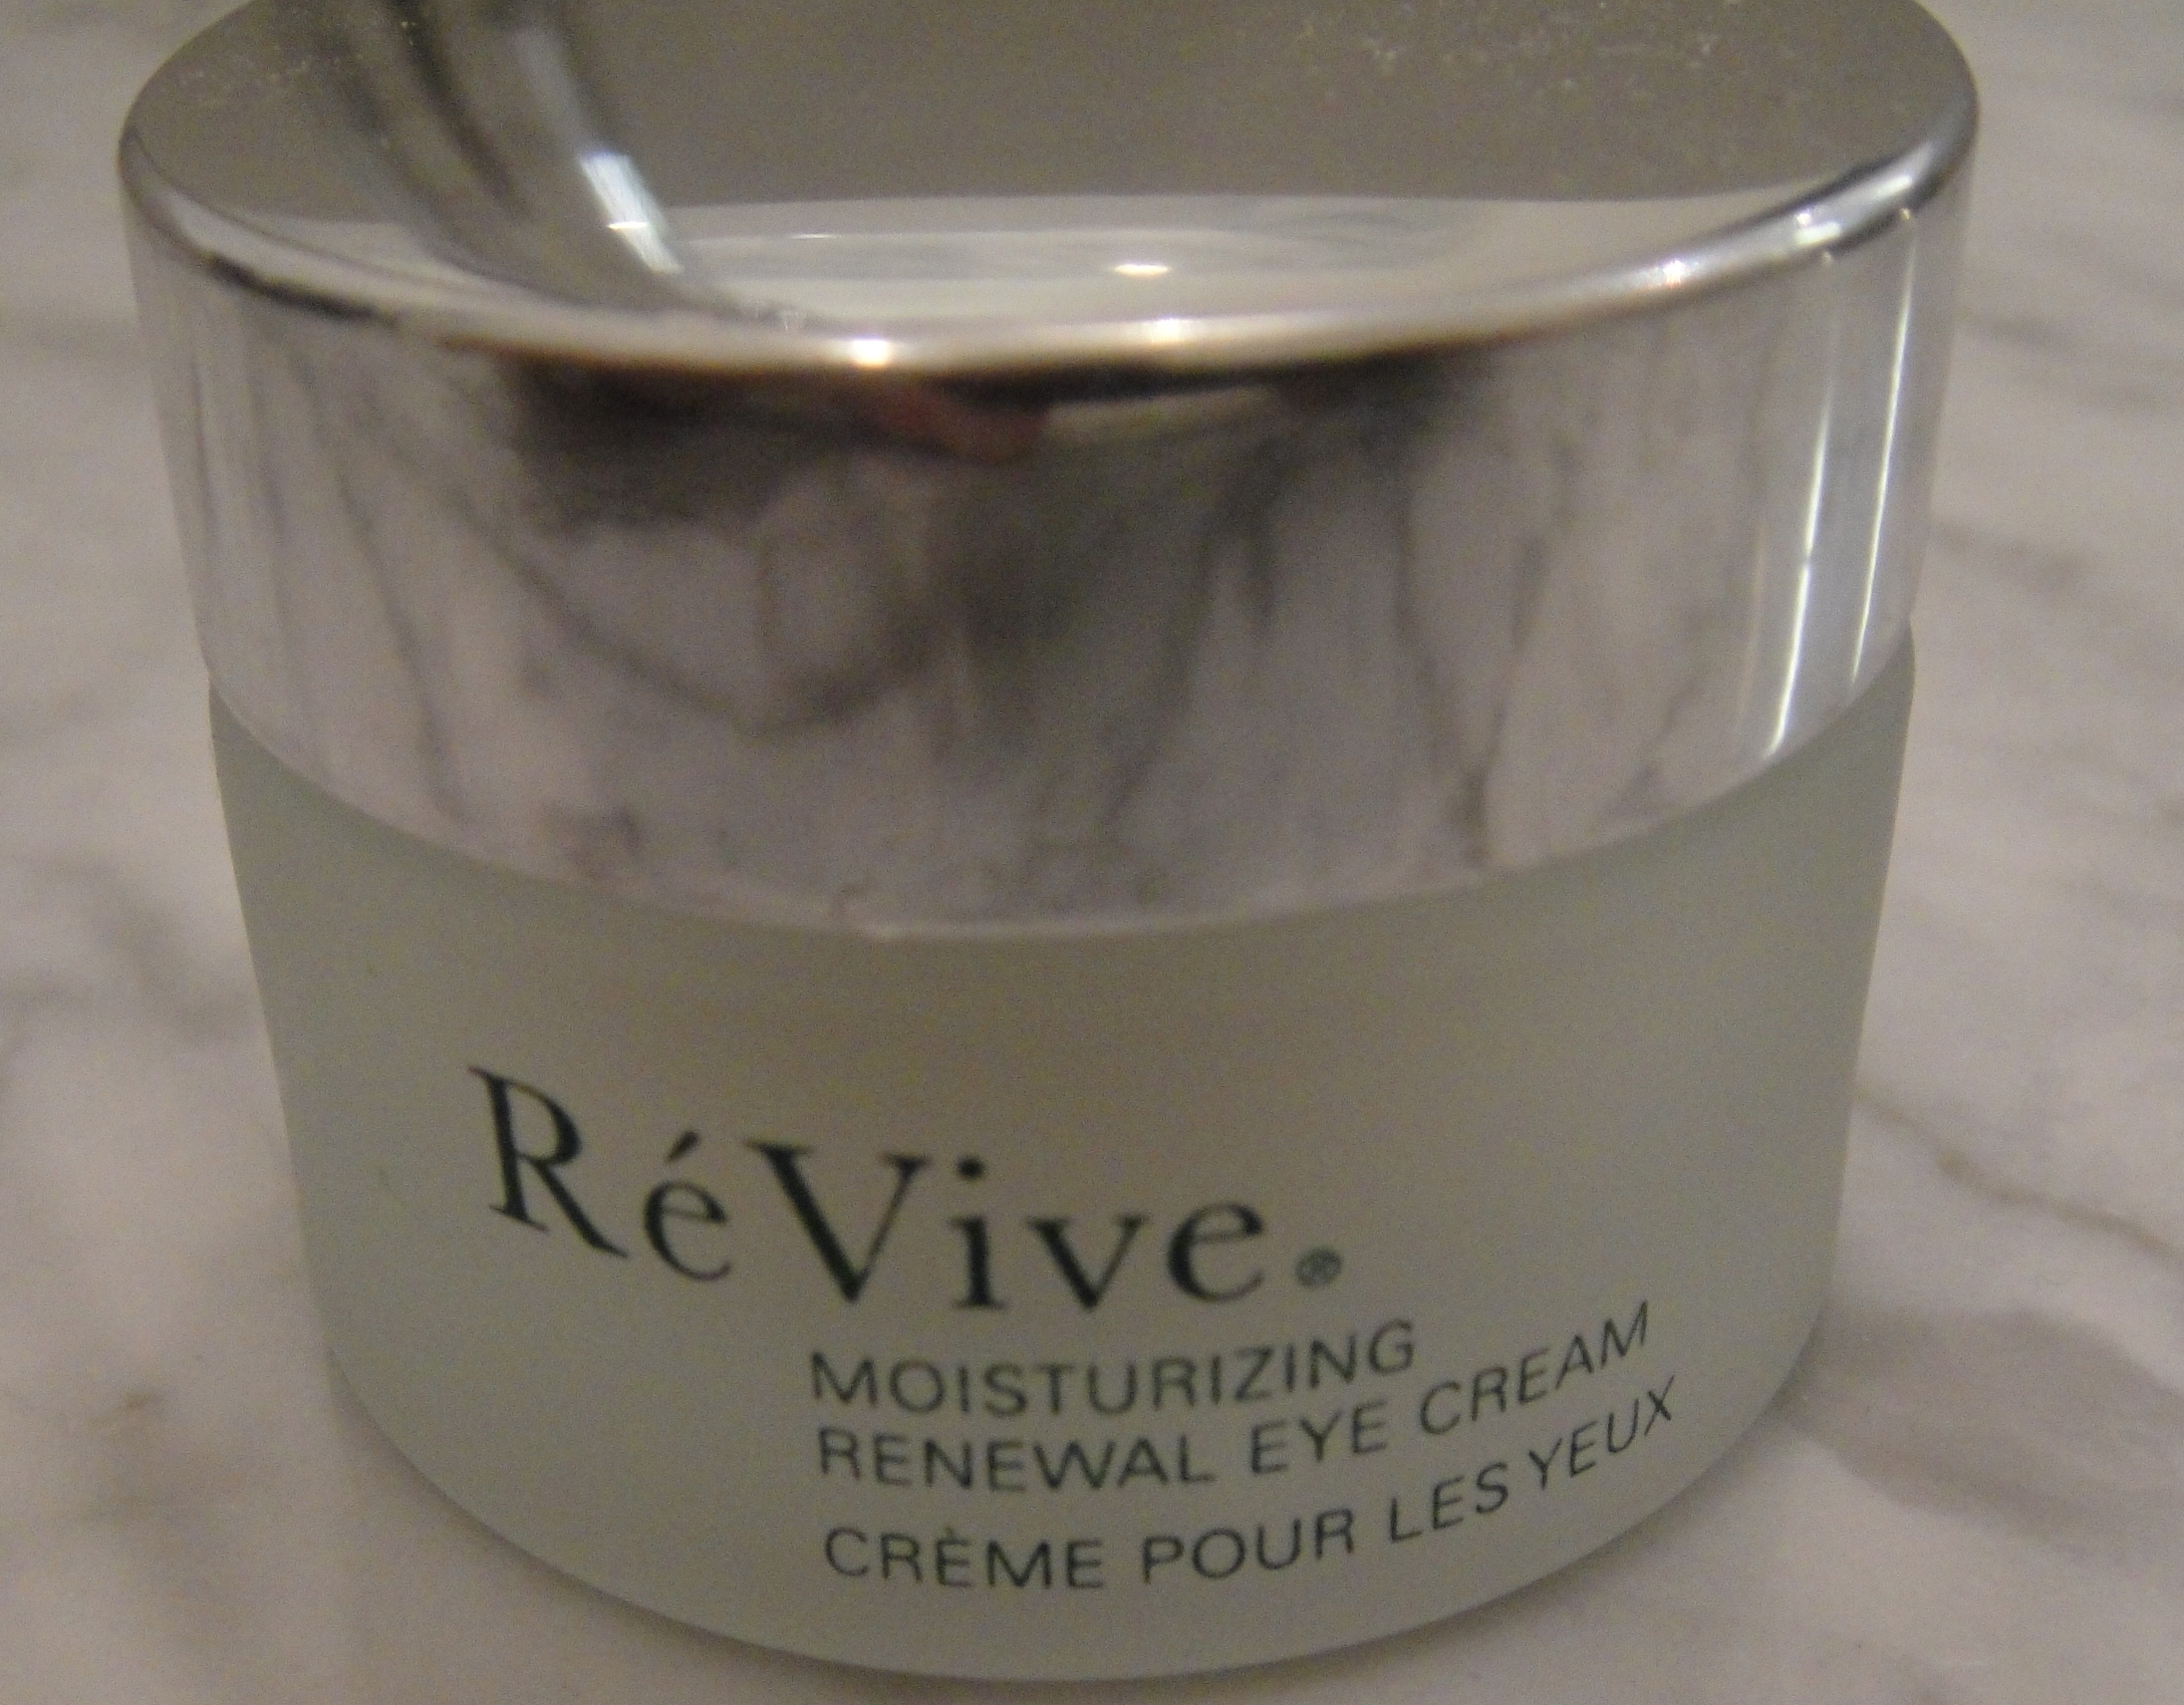 Eyes: Re Vive, moisturizing renewal eye cream